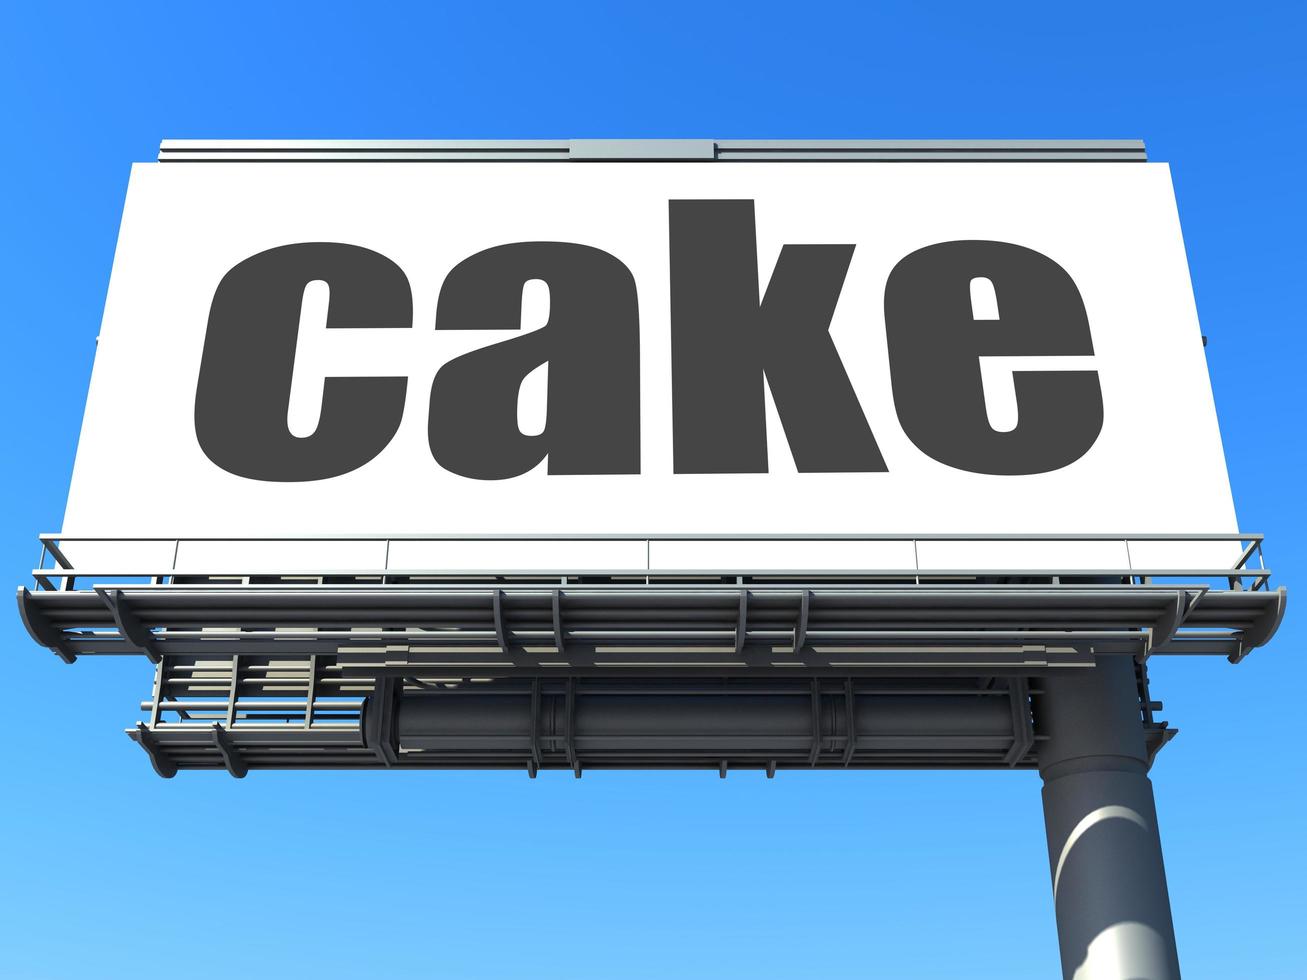 cake word on billboard photo